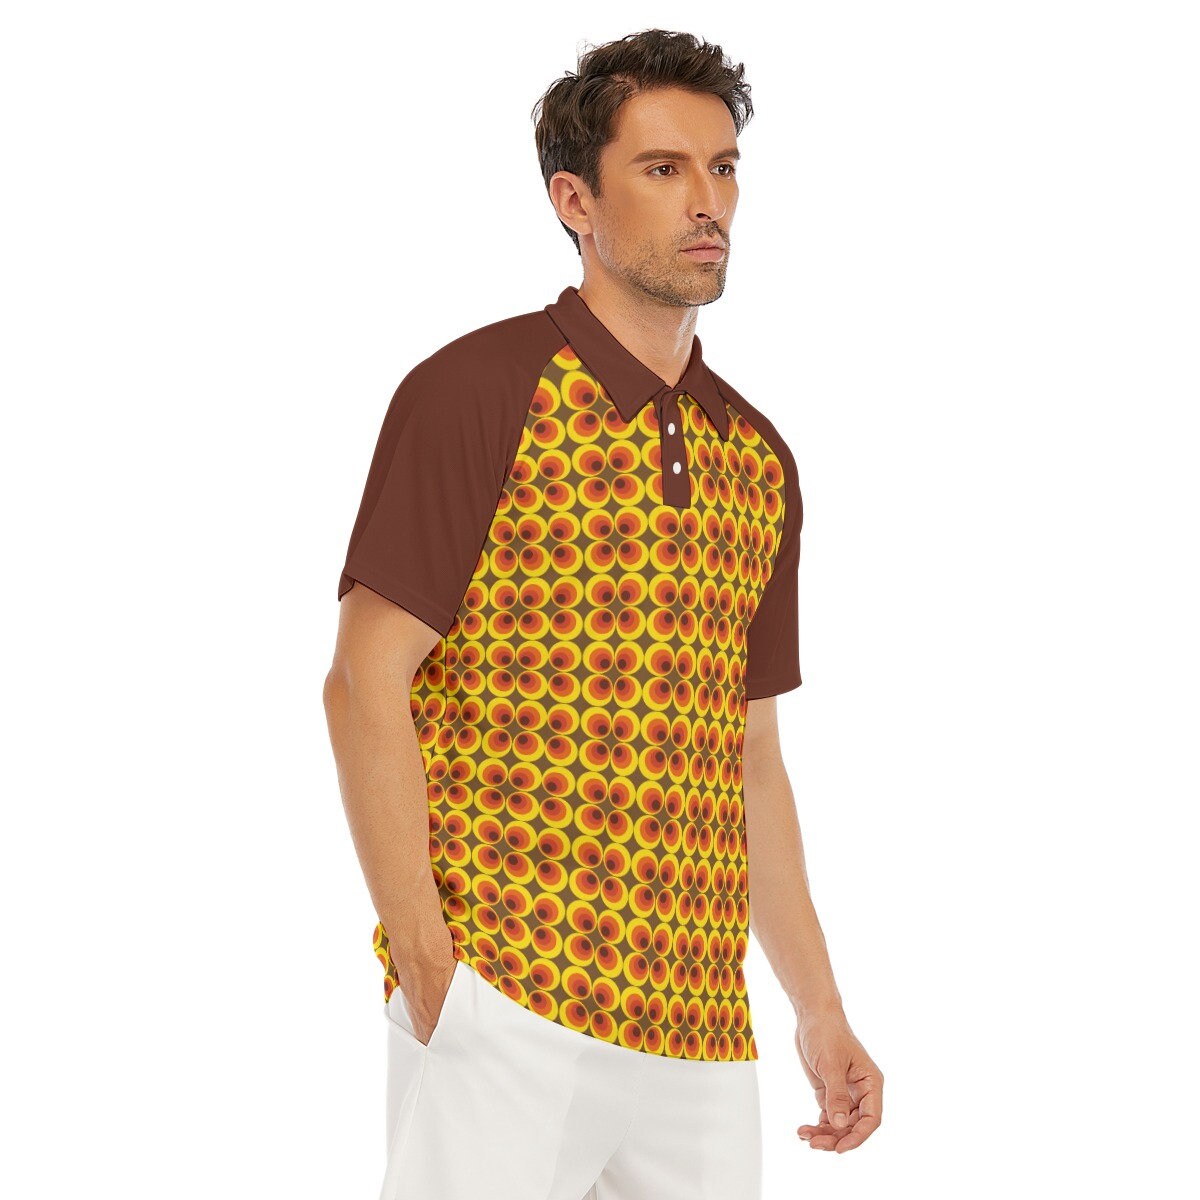 Polo Shirt, Vintage polo, Men's polo shirt, Brown polo shirt, 70s shirt men, Mod shirt,Men's vintage shirt,vintage style shirt,plus size men